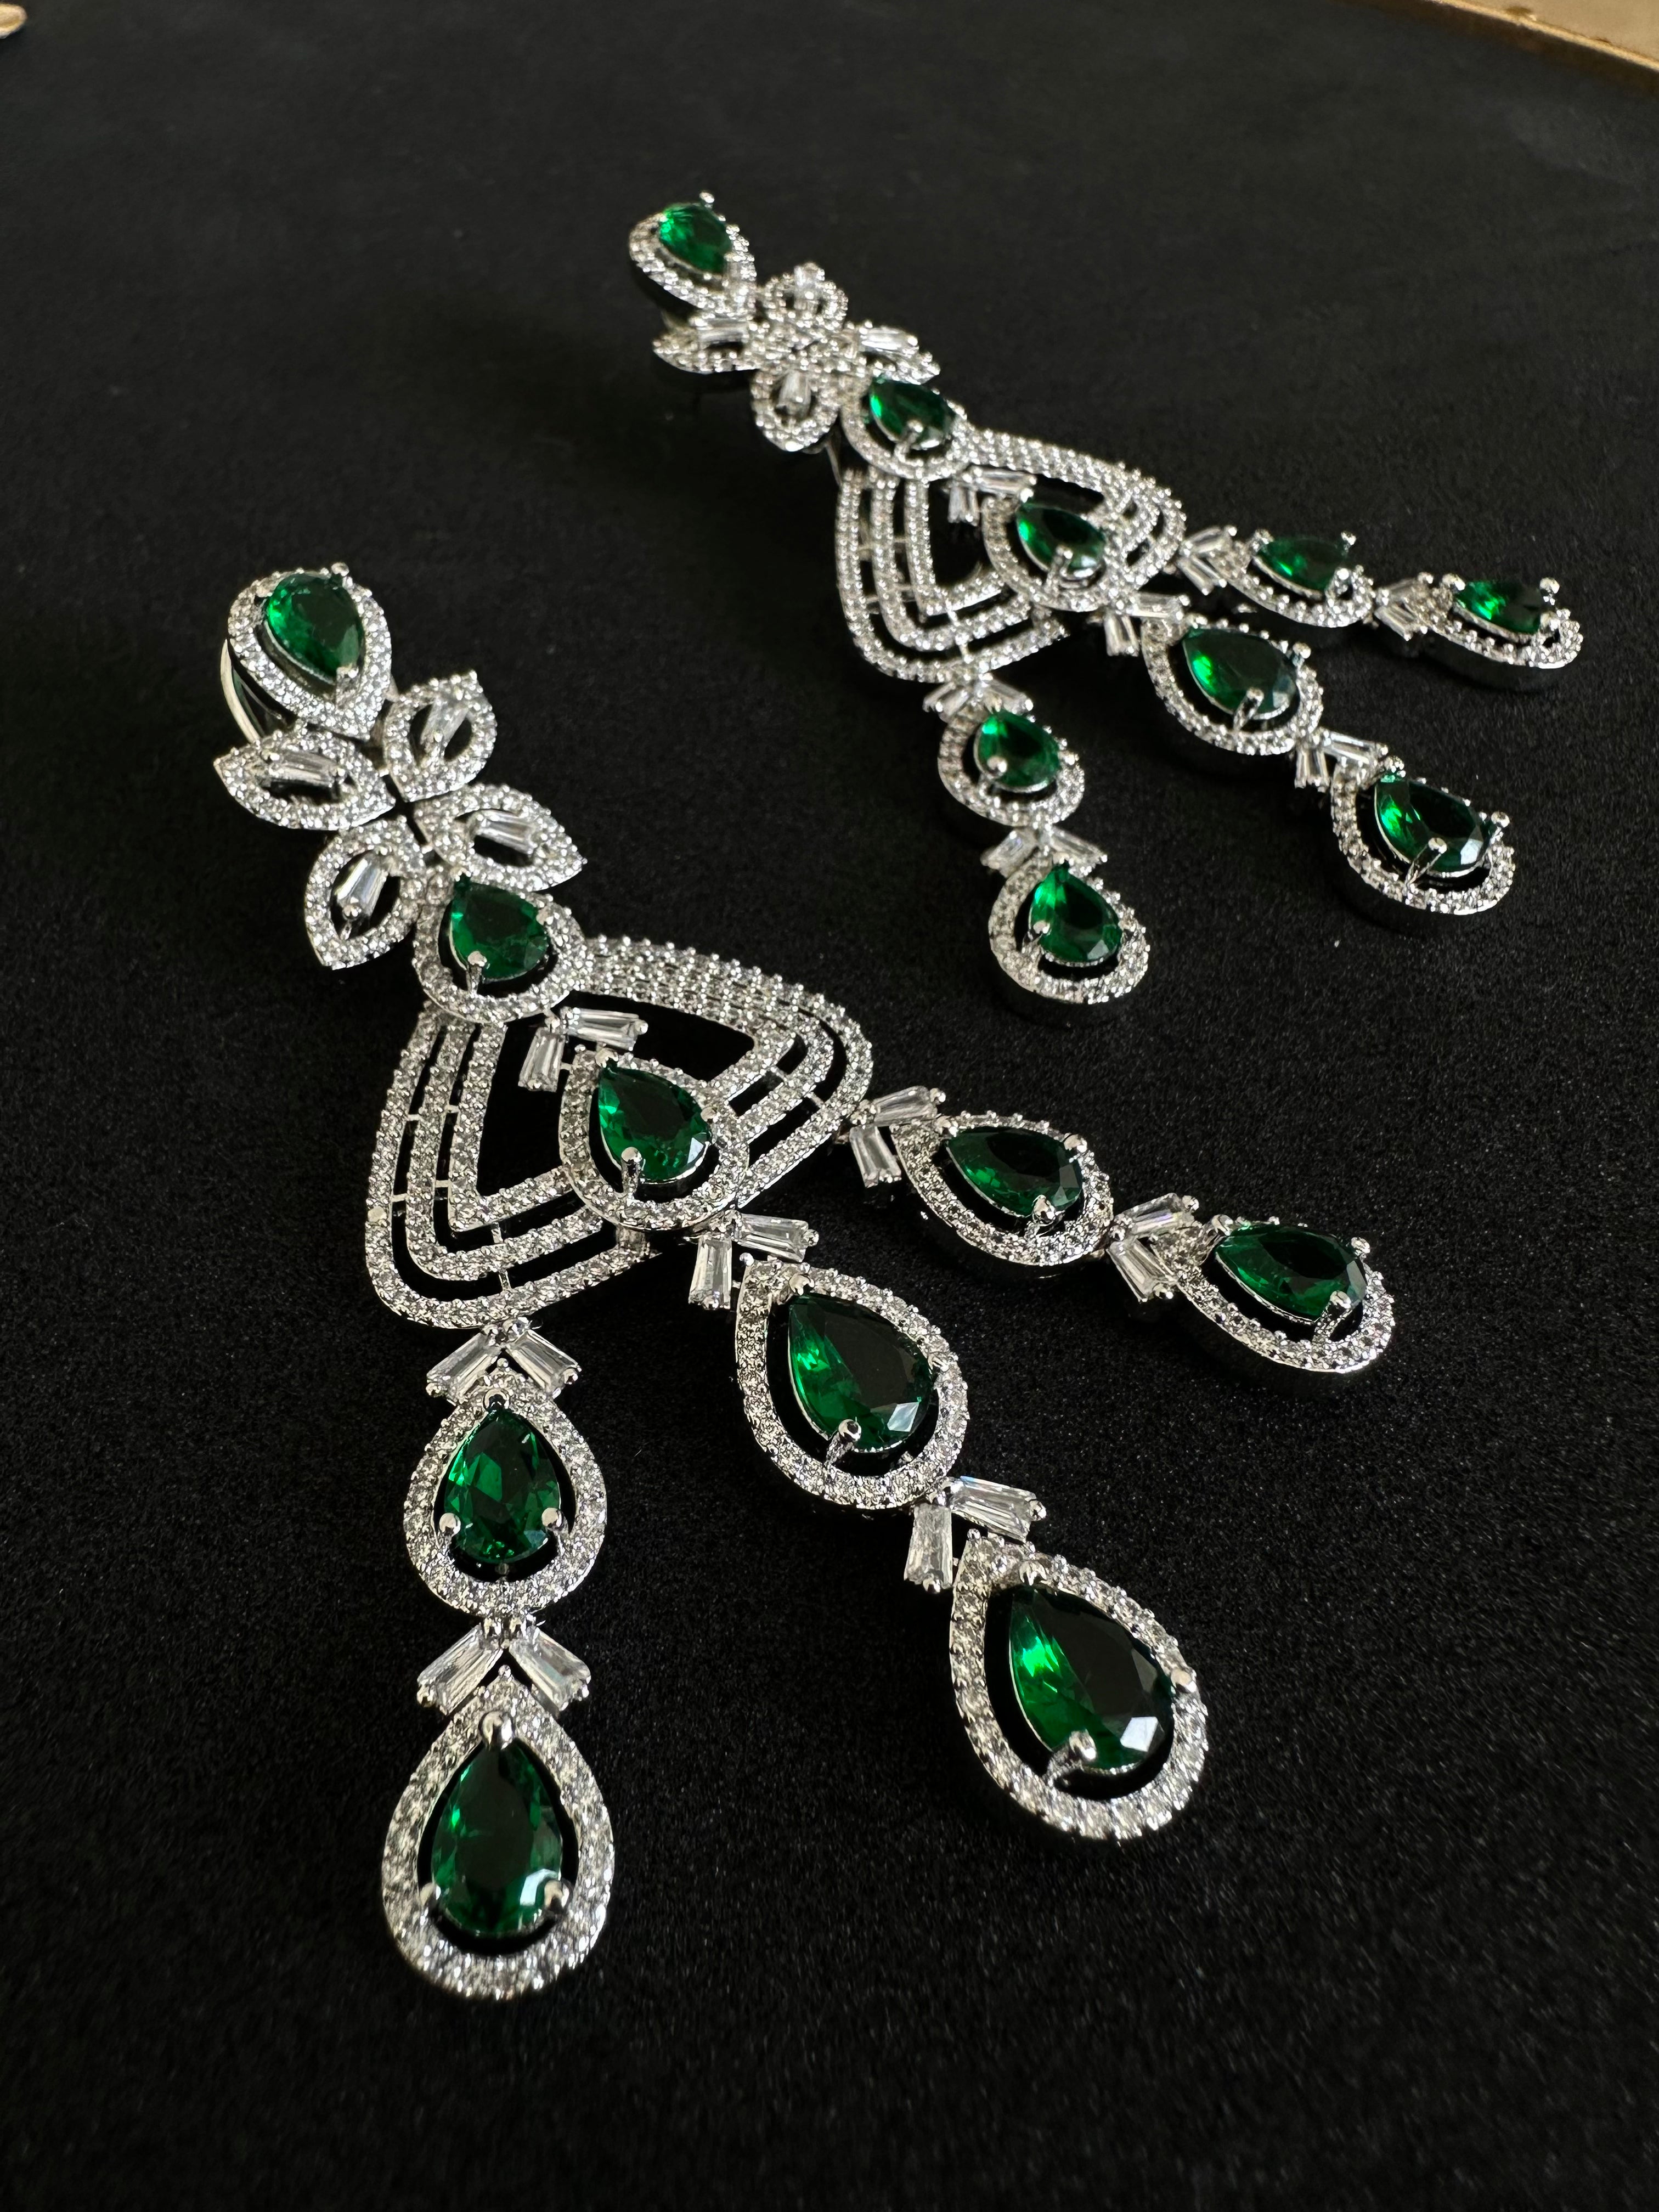 White Diamonds Long Earrings with Green Stones